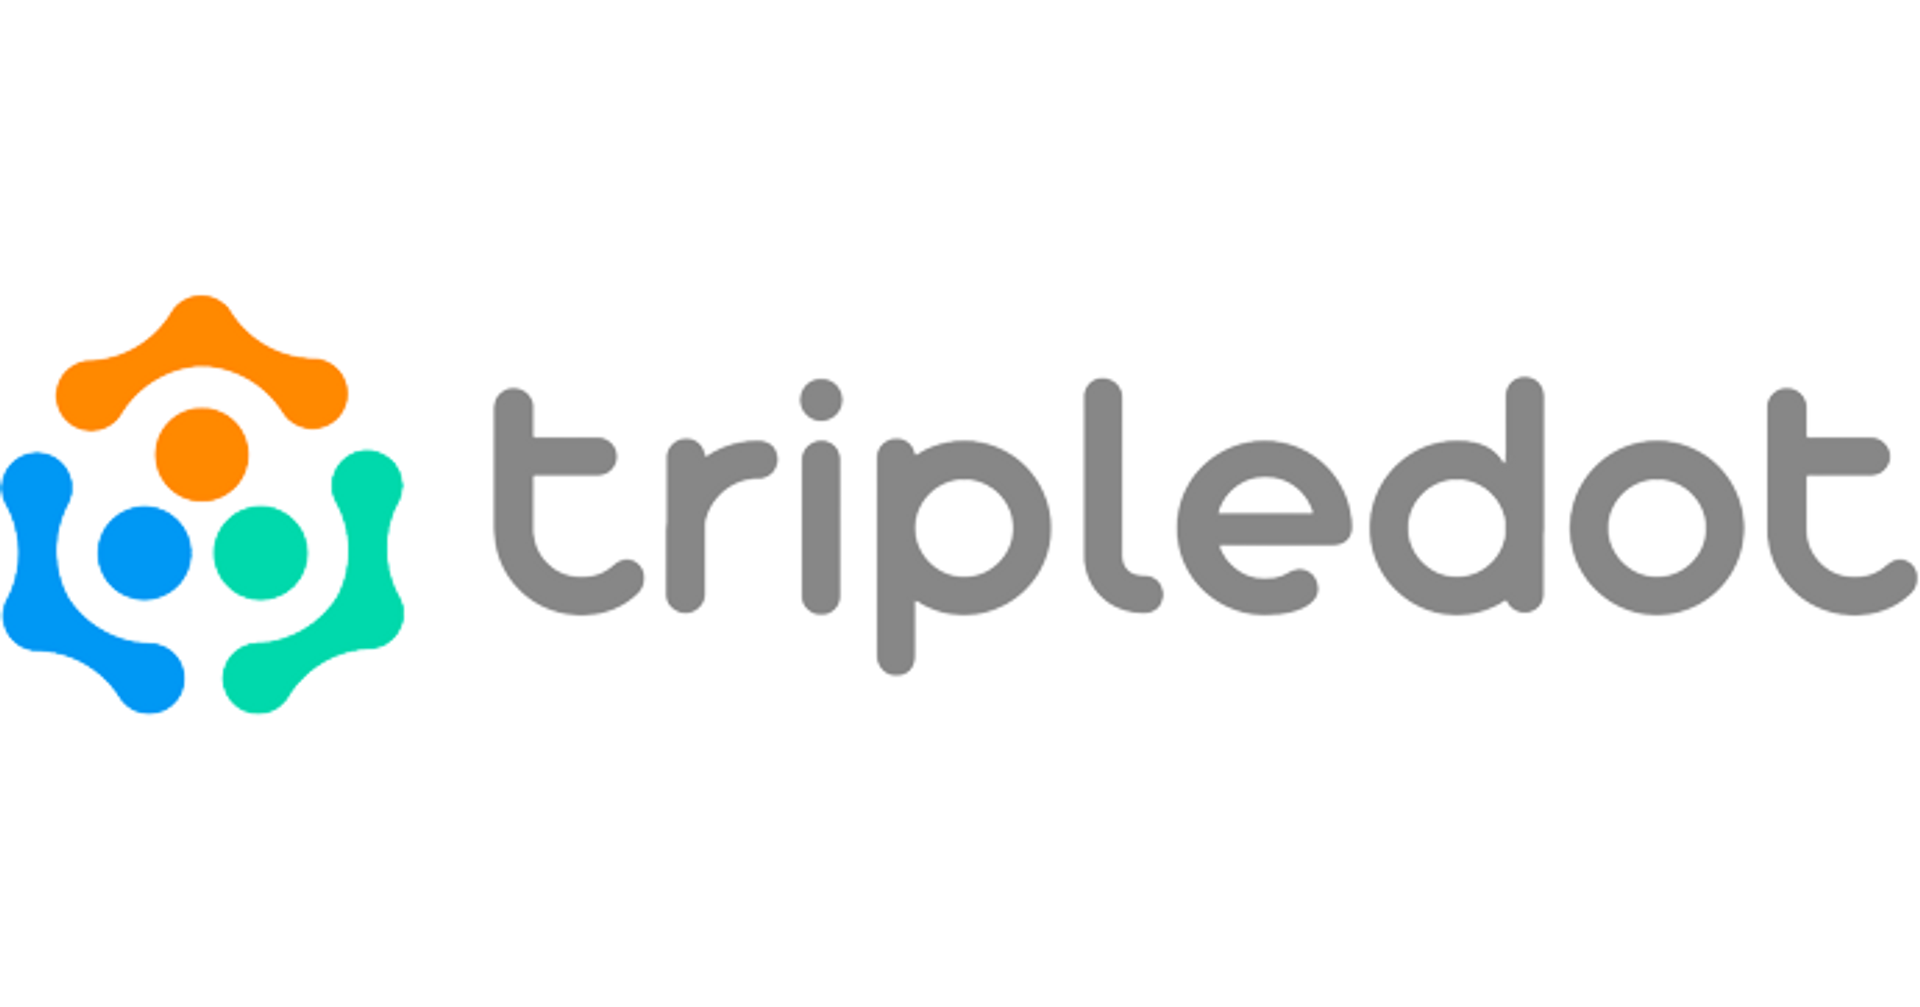 Tripledot